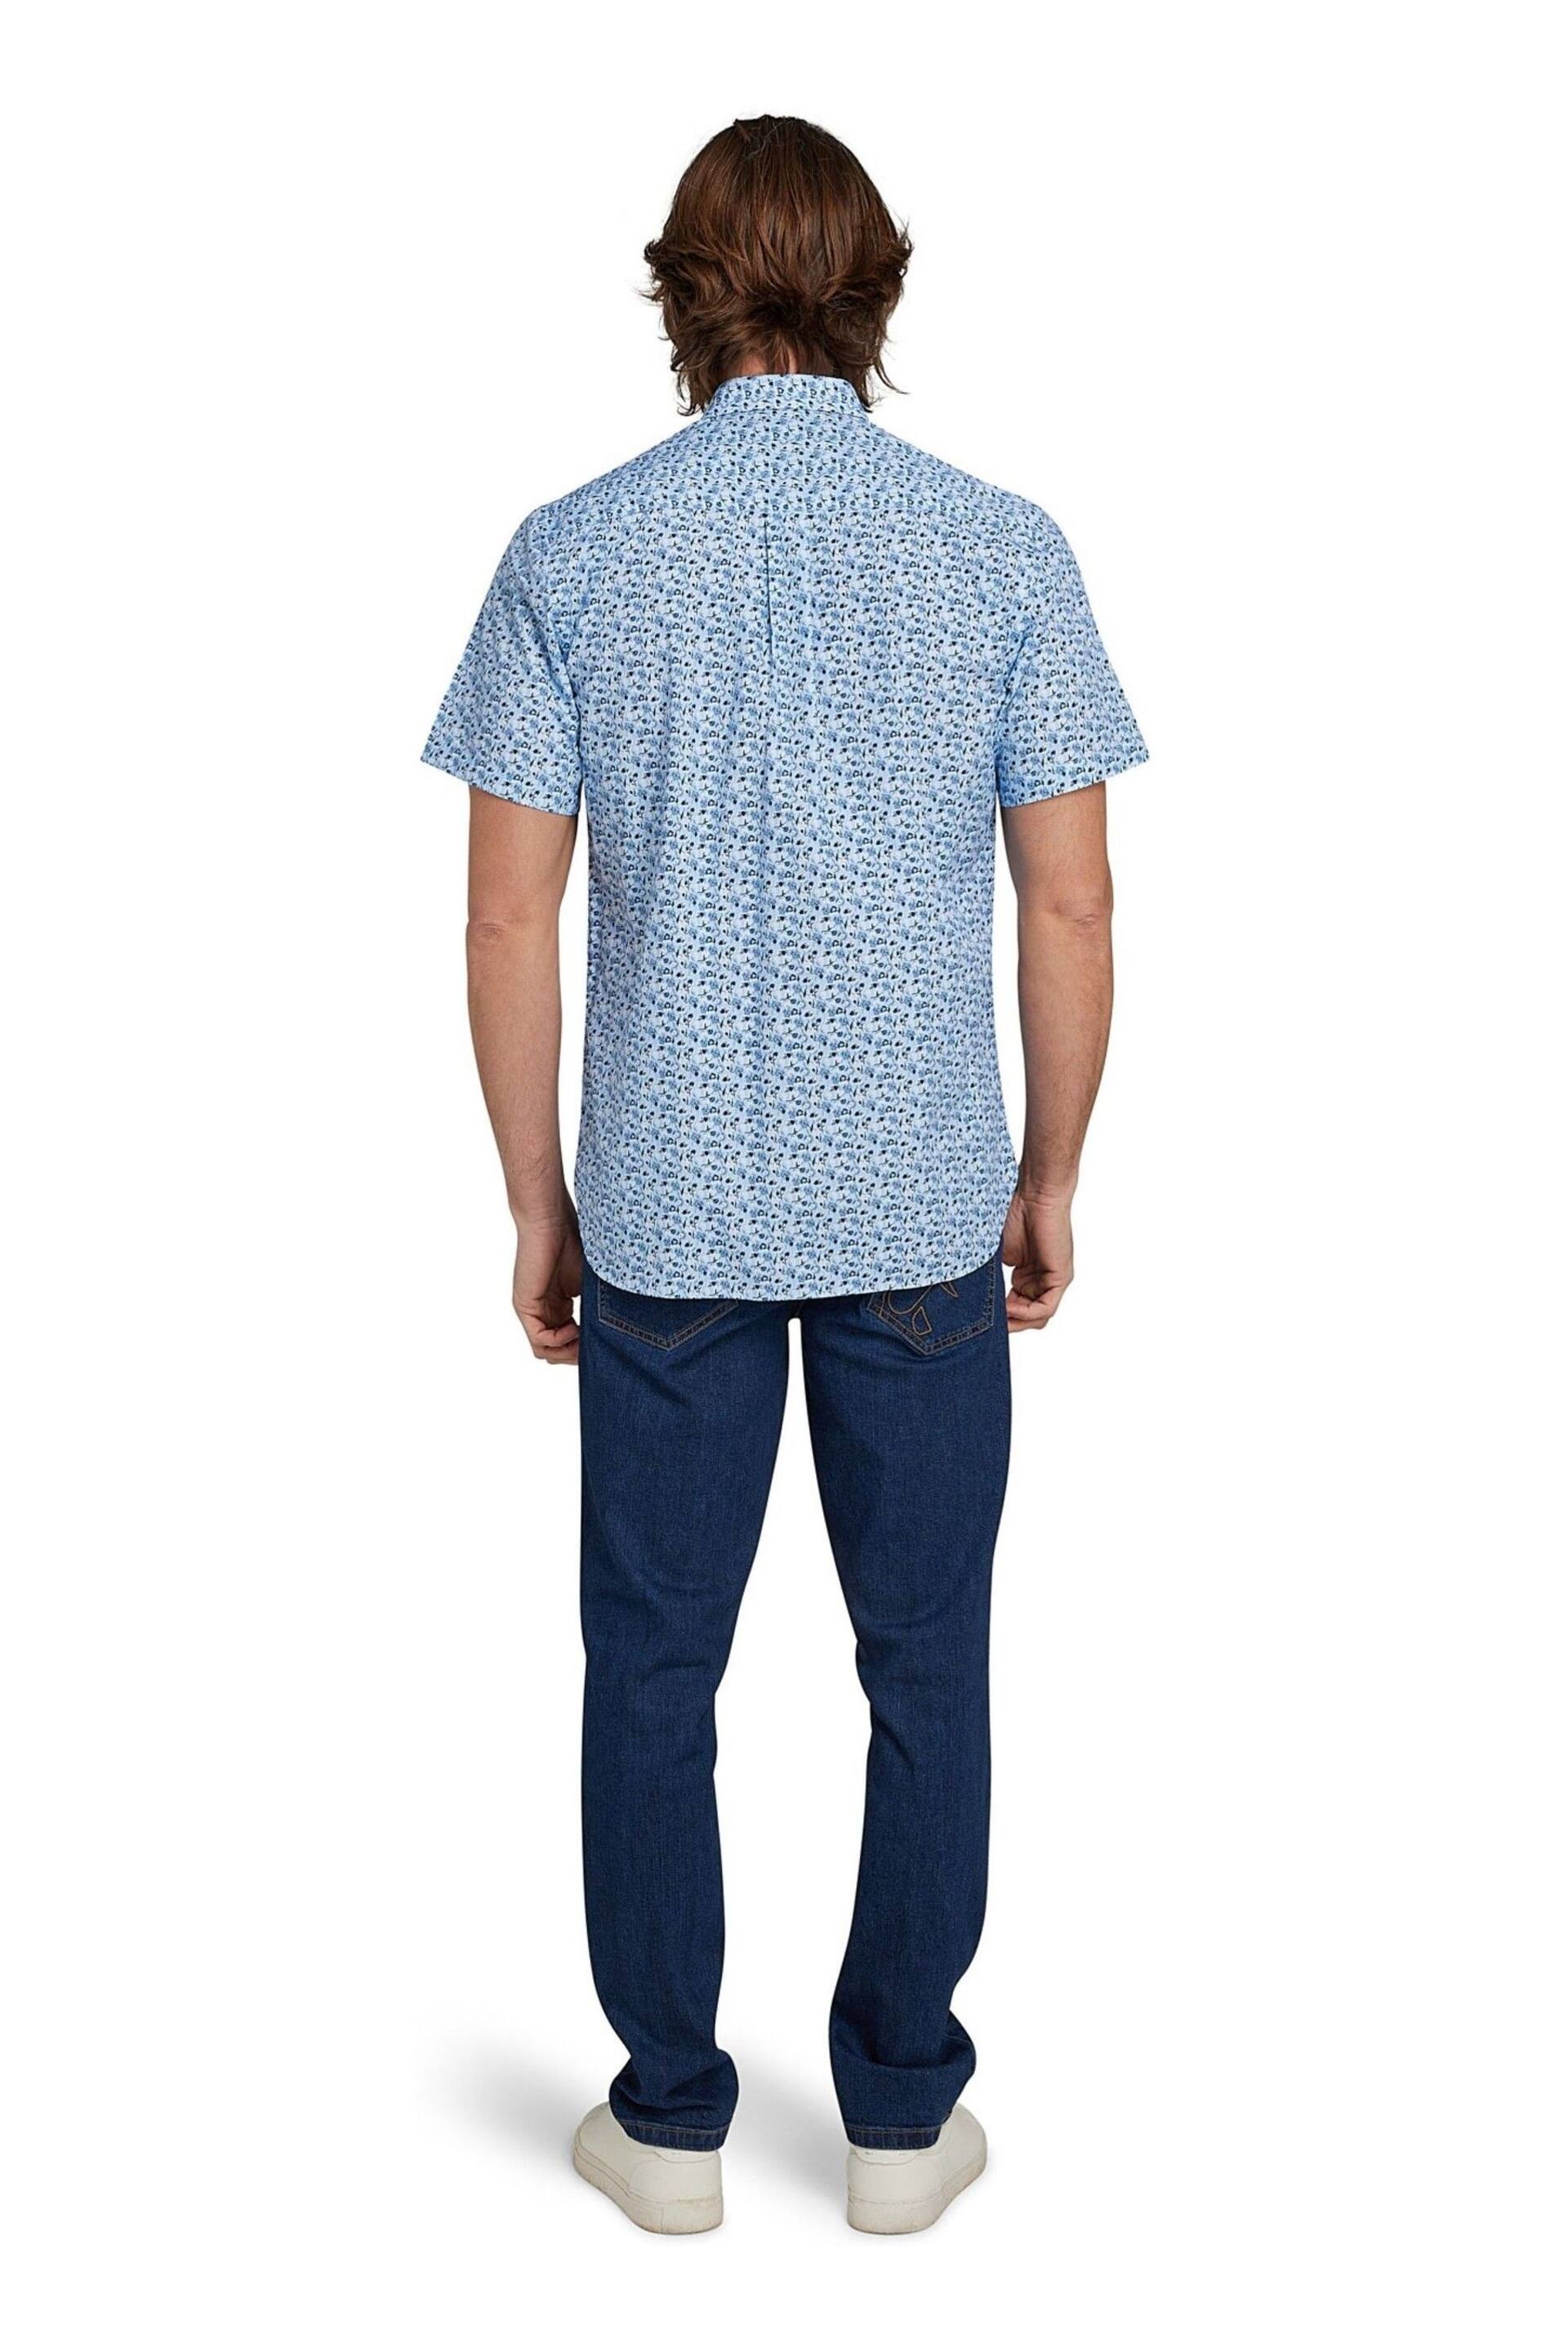 Raging Bull Blue Short Sleeve Ditsy Floral Print Shirt - Image 2 of 7